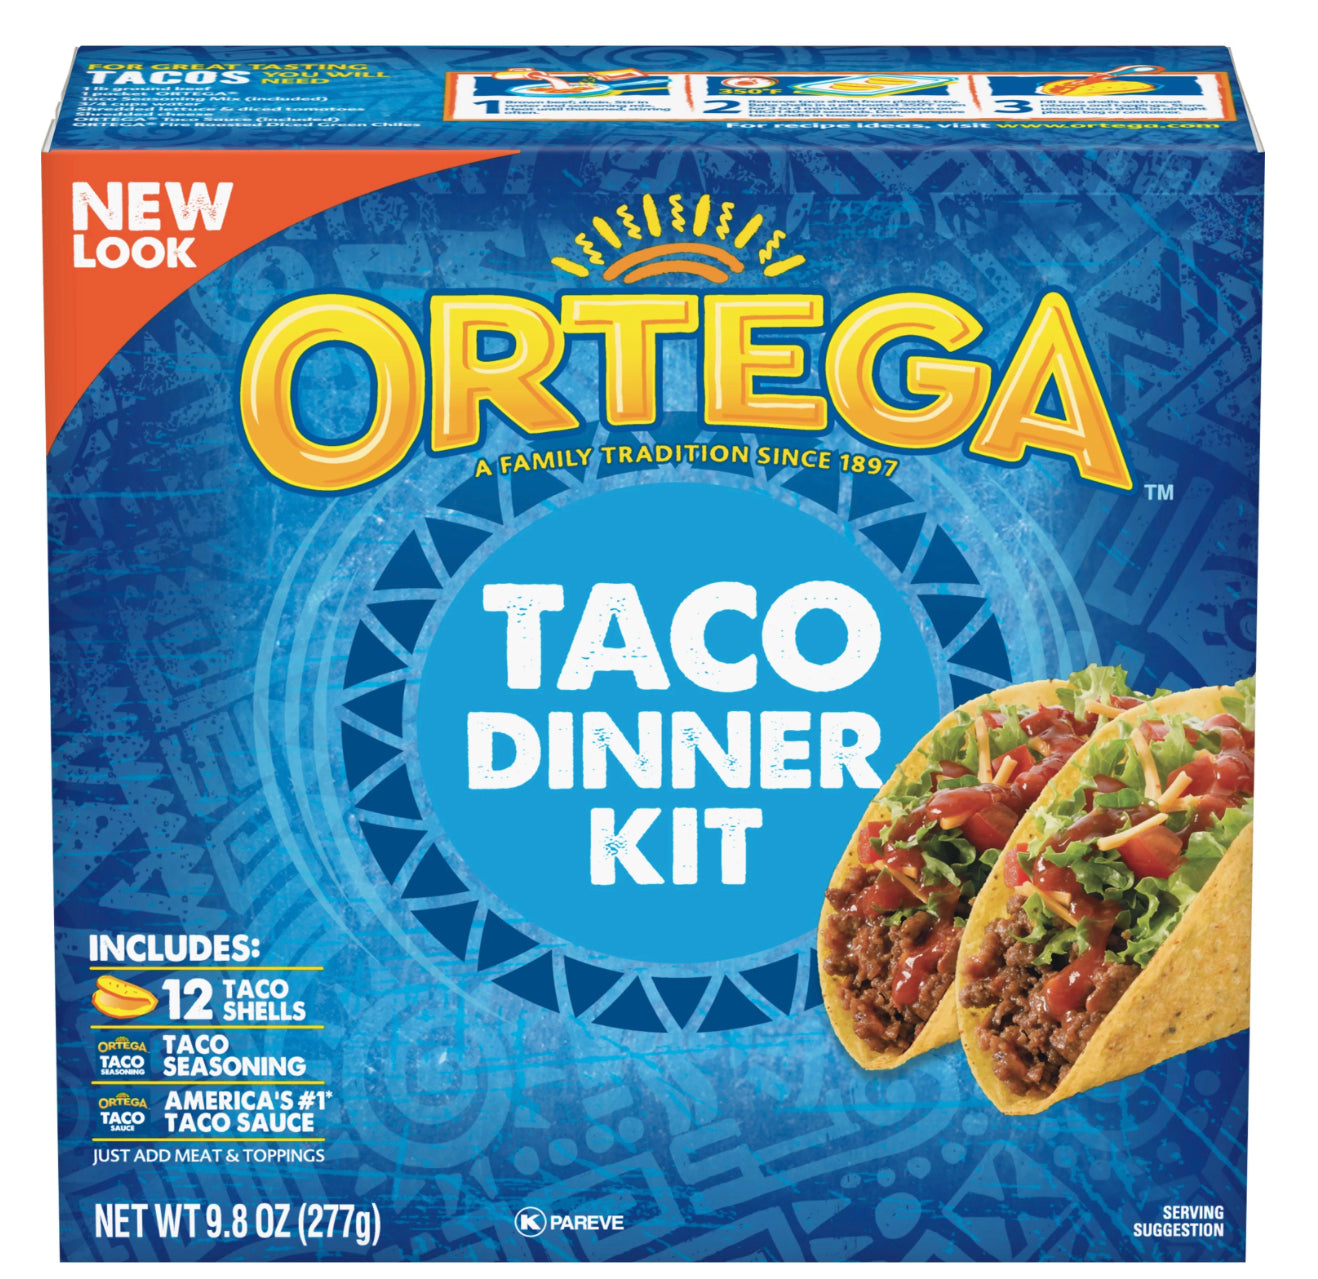 Ortega Taco Dinner Kit 12ct Taco Shells 9.8 oz